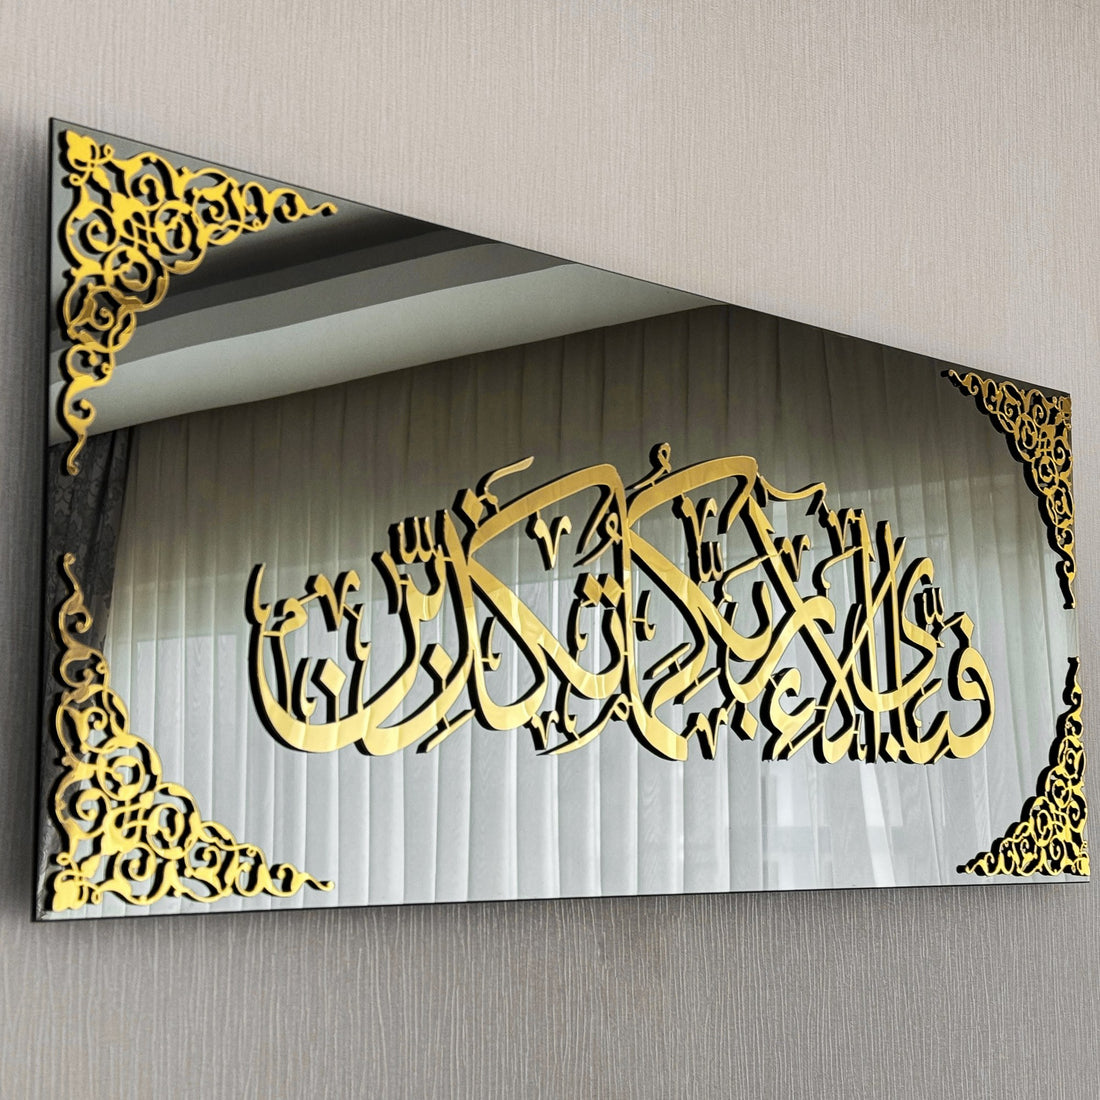 surah-rahman-verse-13-glass-muslim-wall-art-arabic-calligraphy-black-glass-beautiful-calligraphic-design-shukranislamicarts